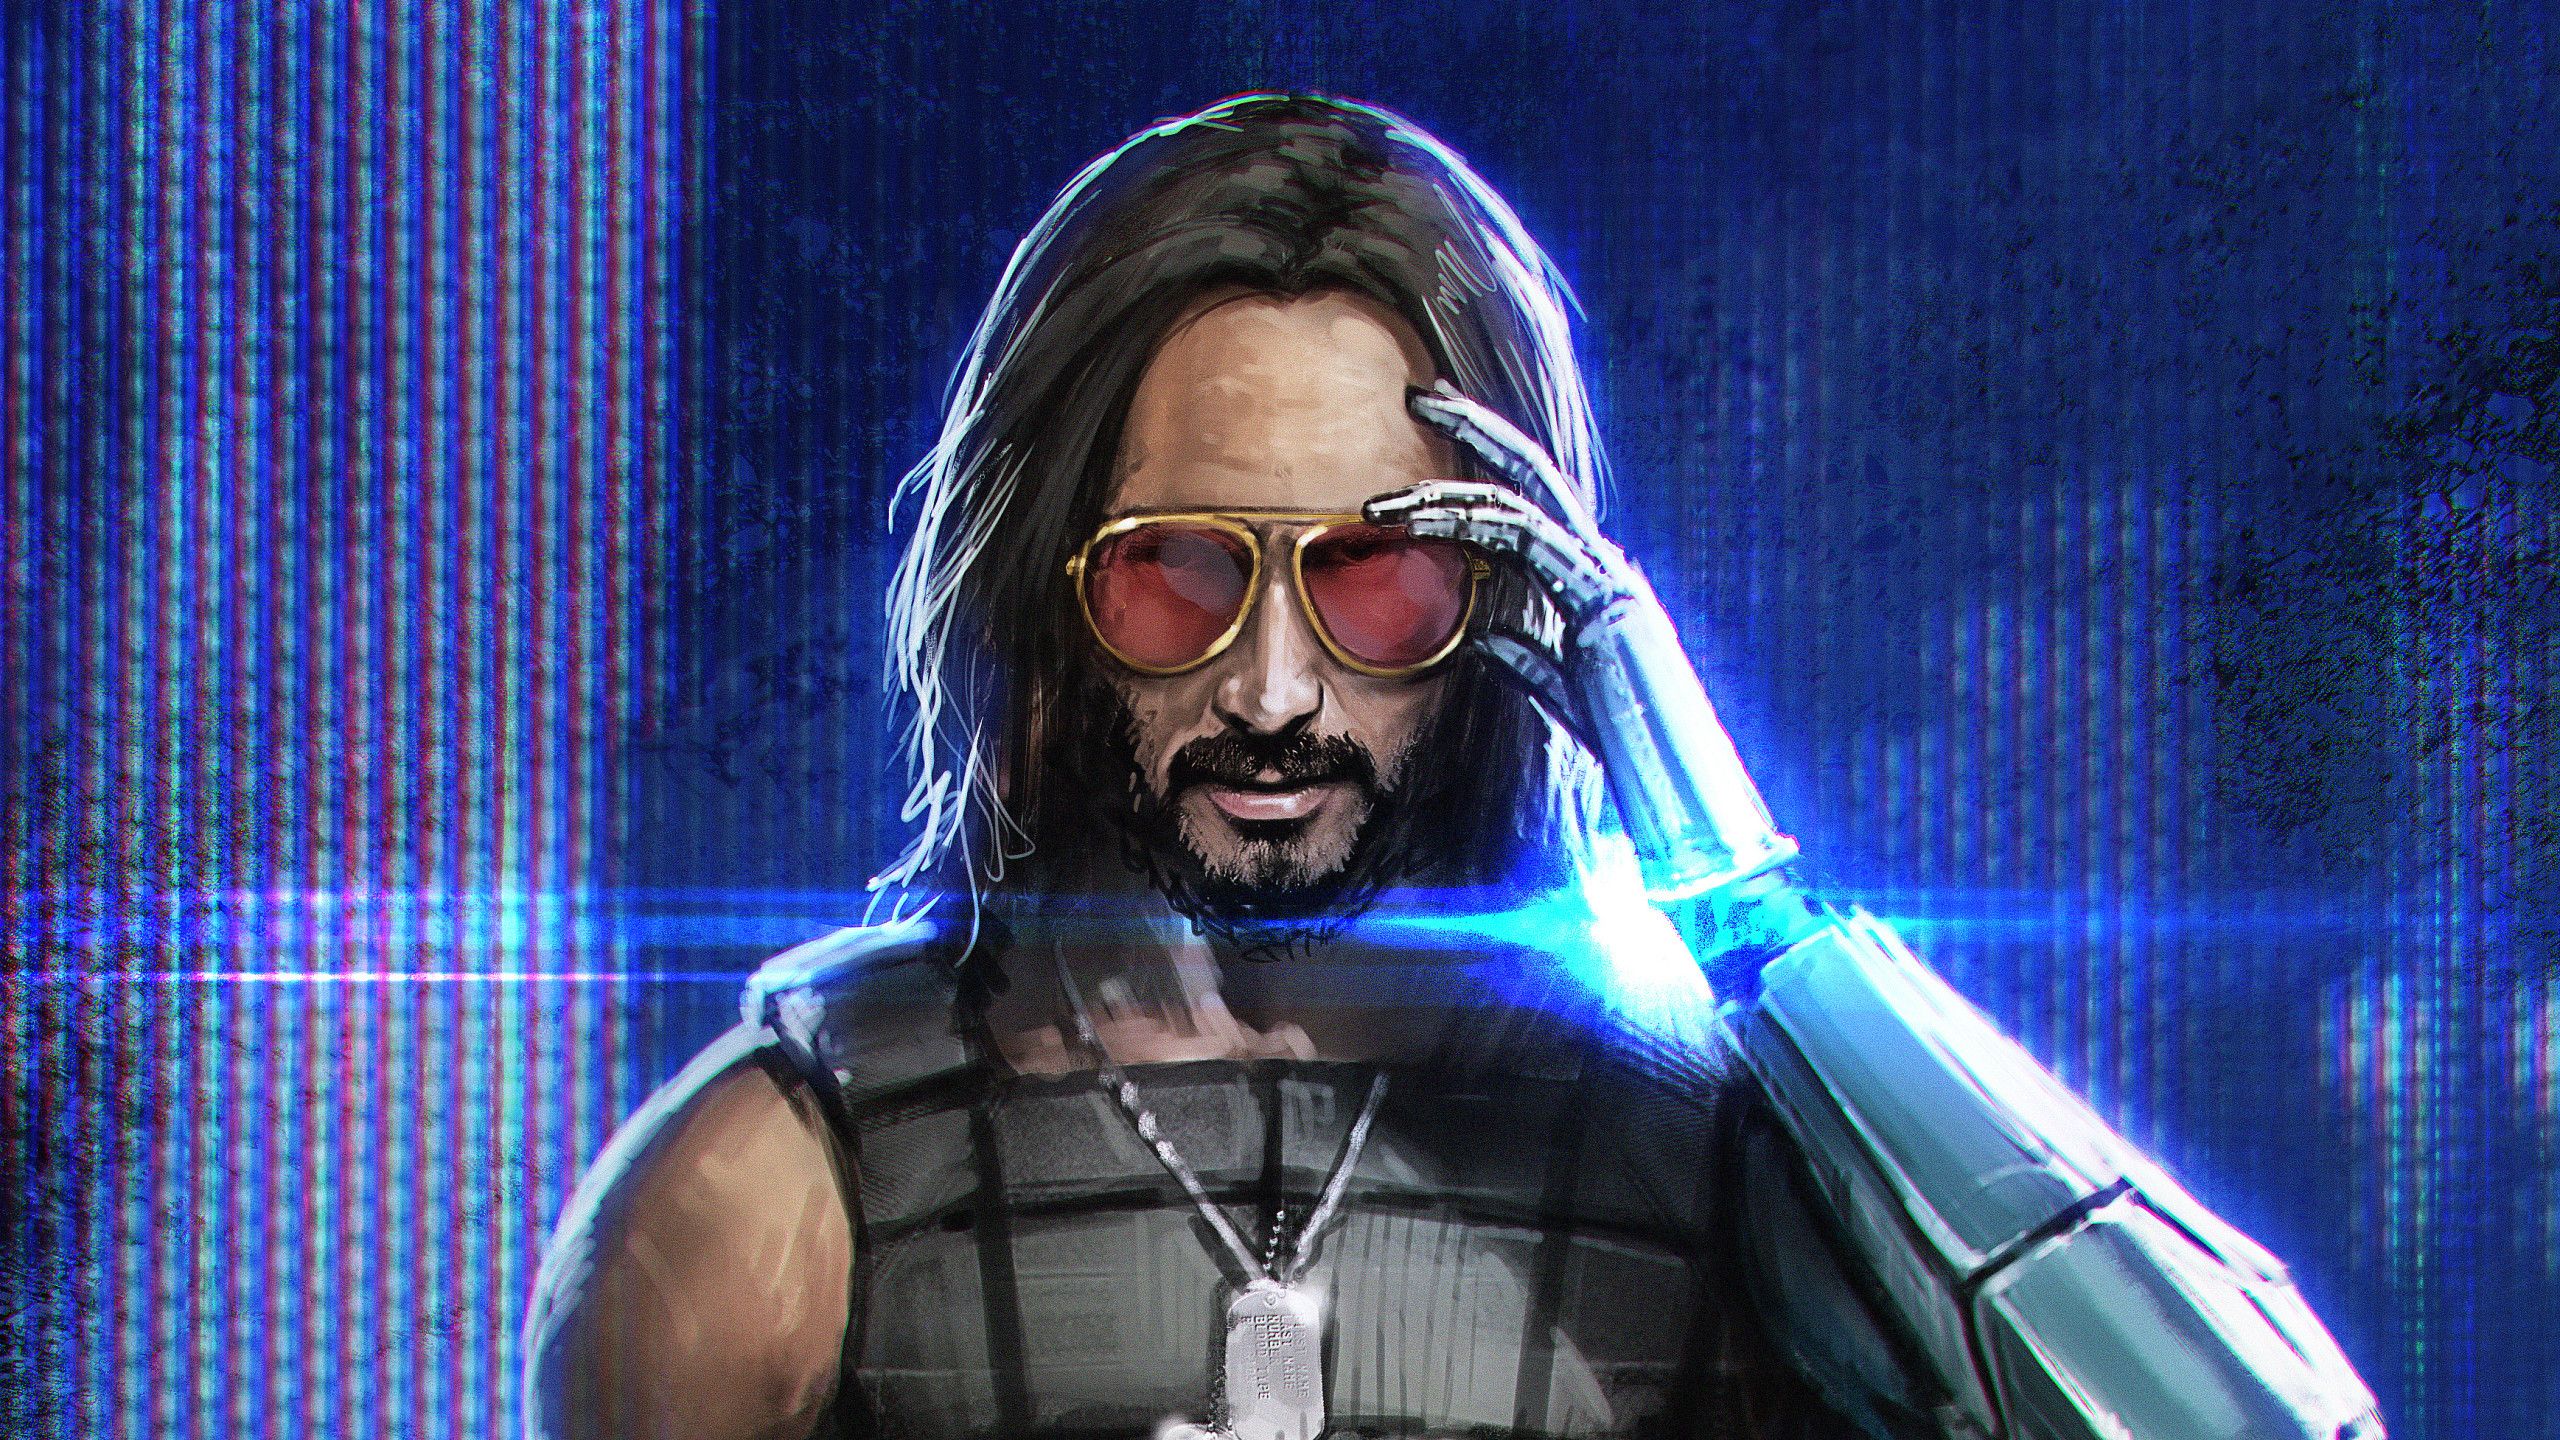 Cyberpunk 2077 Keanu Reeves Video Game 2020 Wallpapers Wallpaper Cave 6285